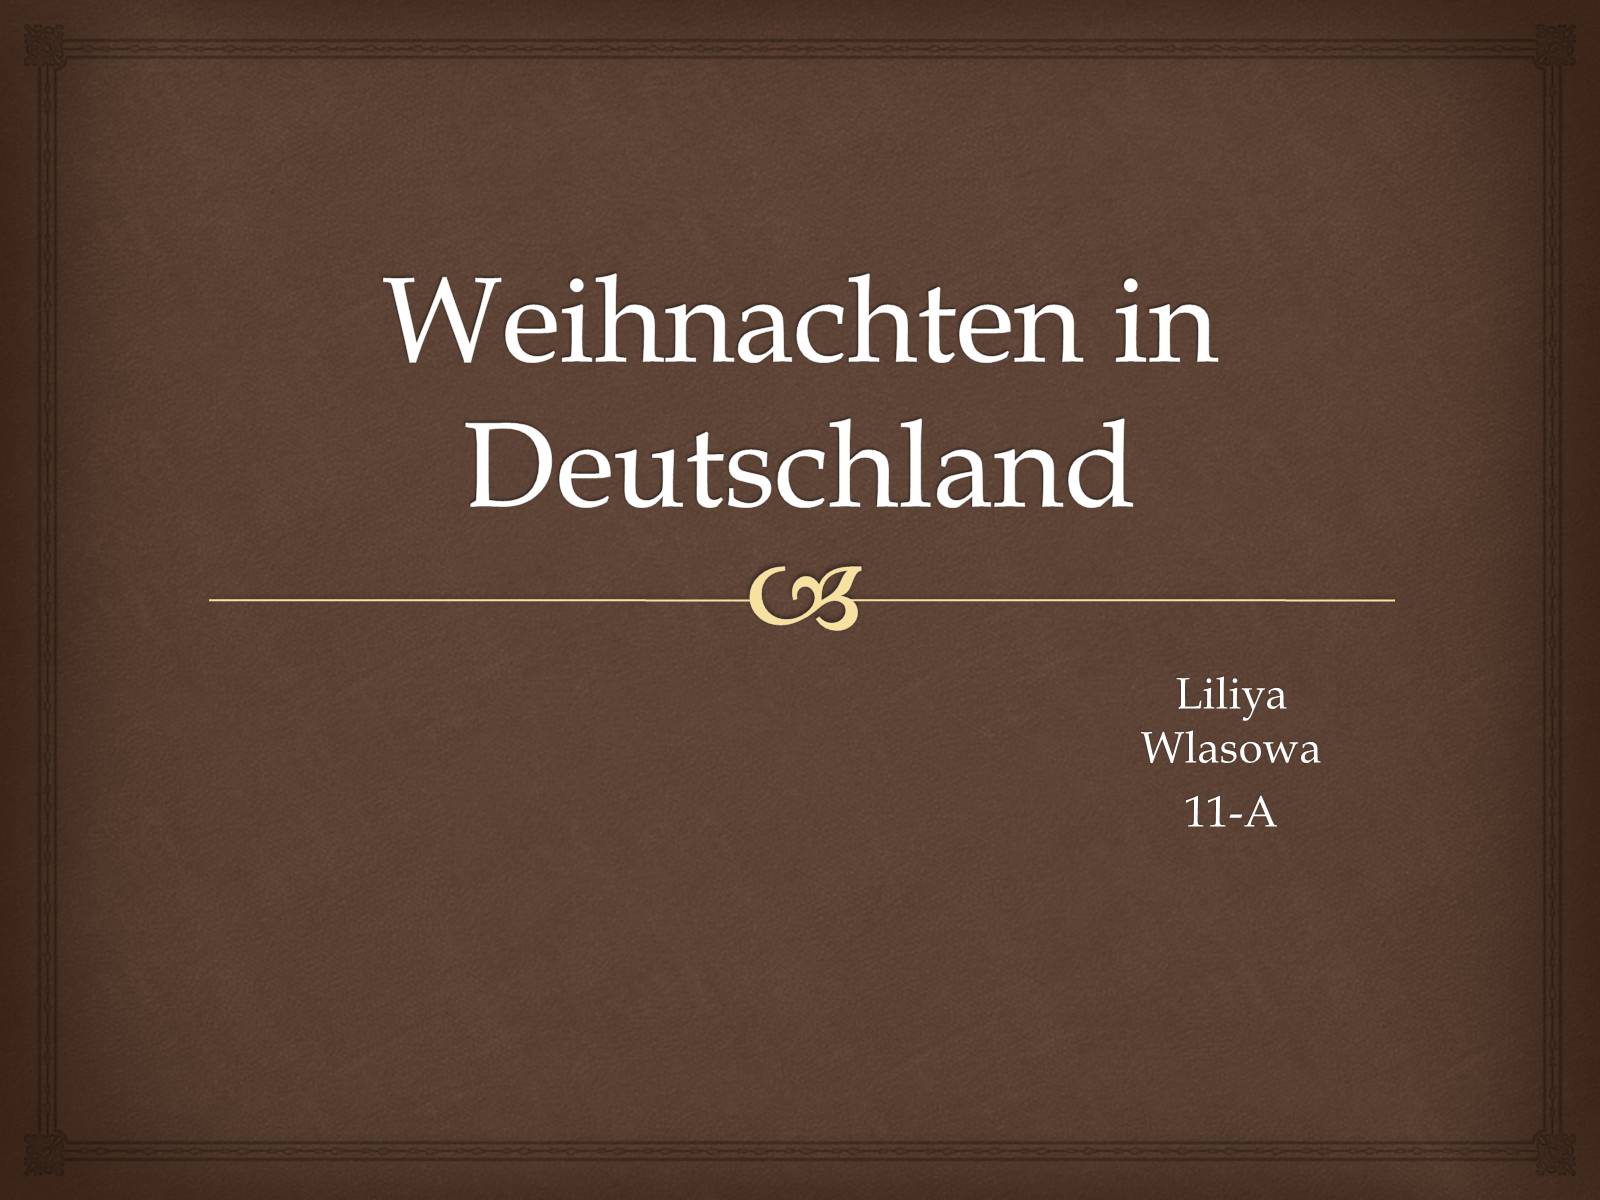 Презентація на тему «Weihnachten in Deutschland» (варіант 1) - Слайд #1